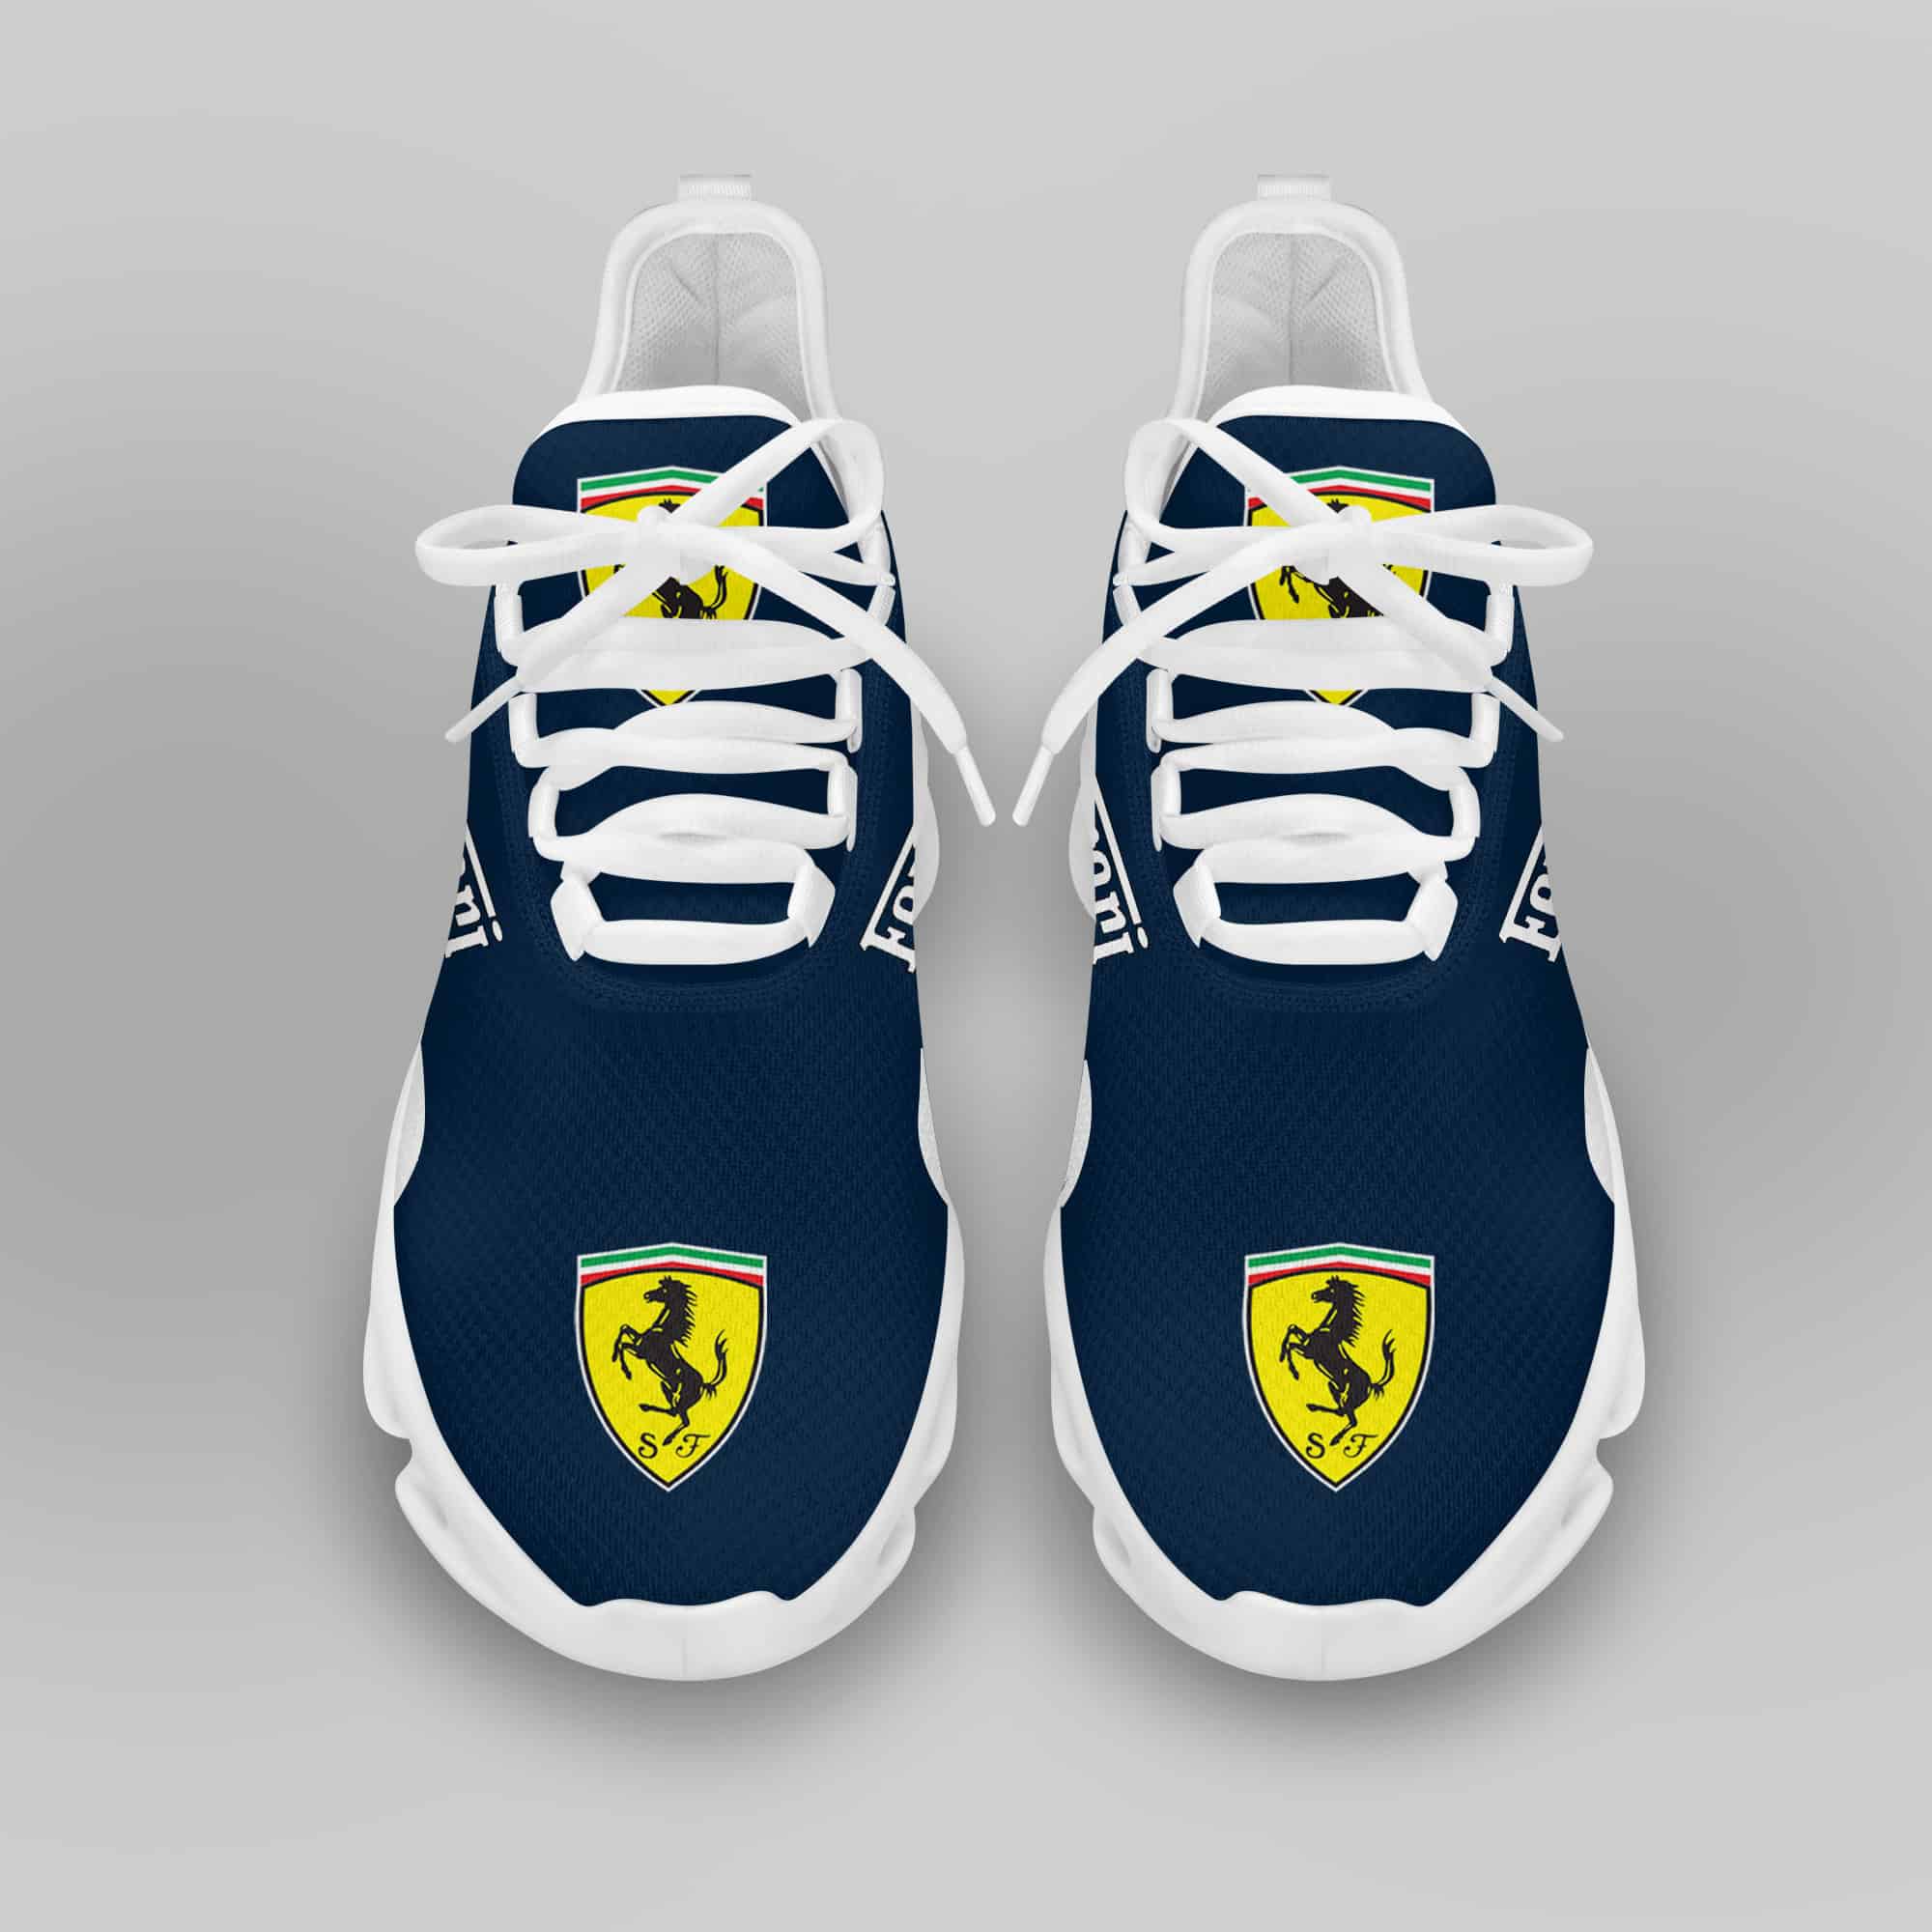 Ferrari Sneaker Running Shoes Max Soul Shoes Sneakers Ver 11 3